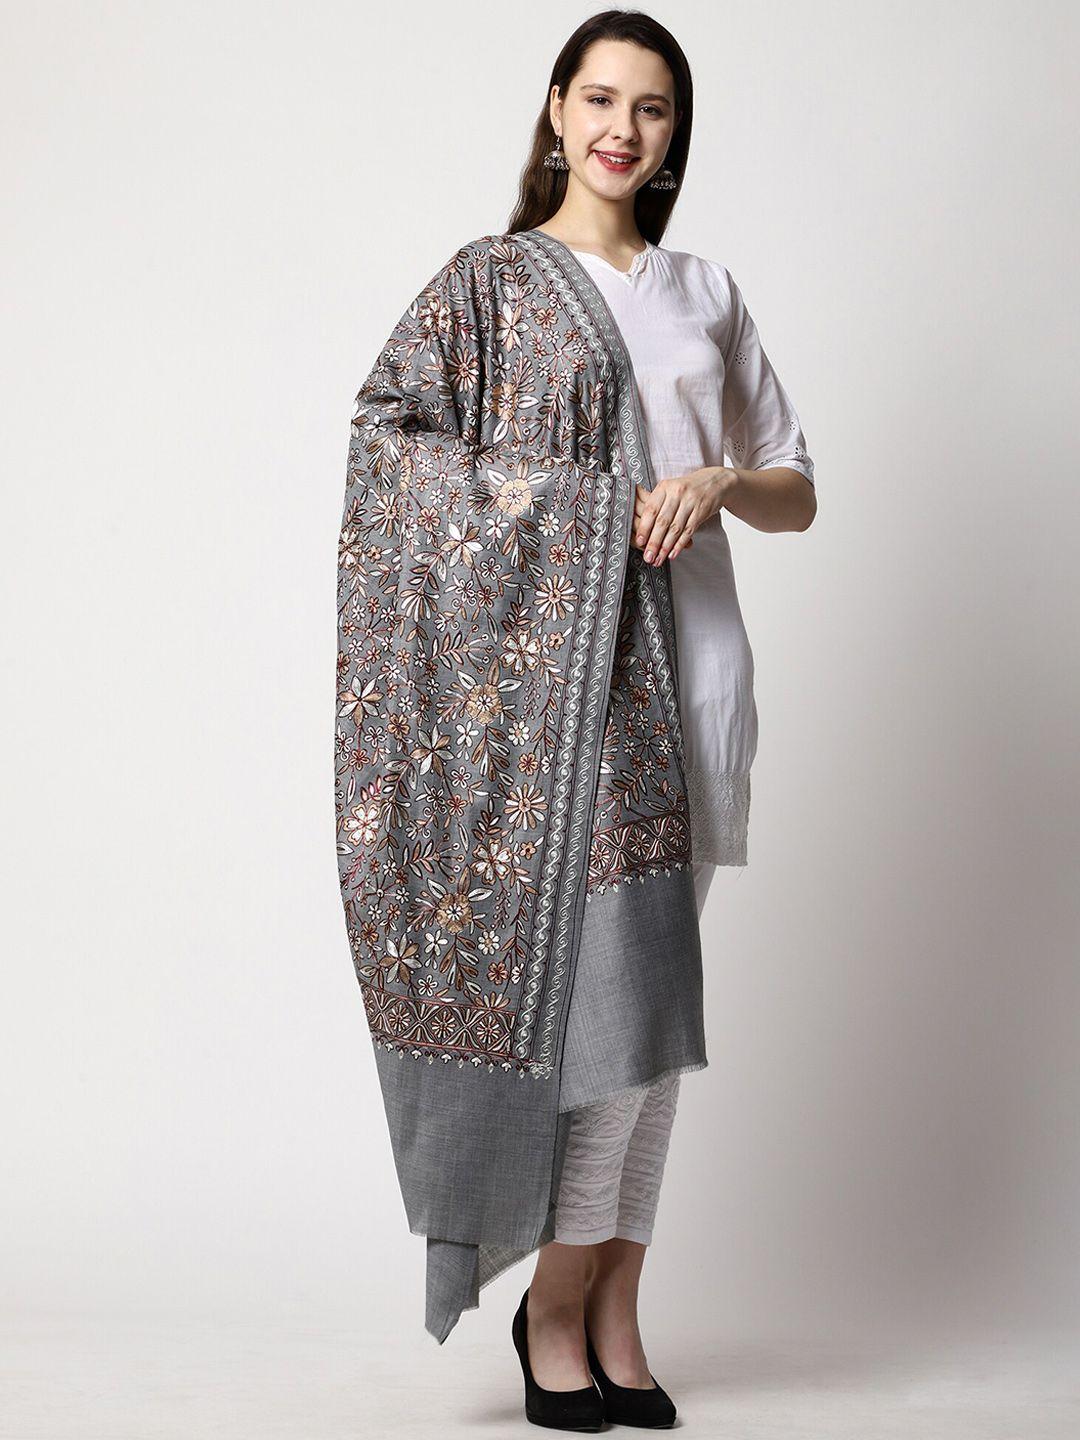 swi stylish floral aari work embroidered shawl